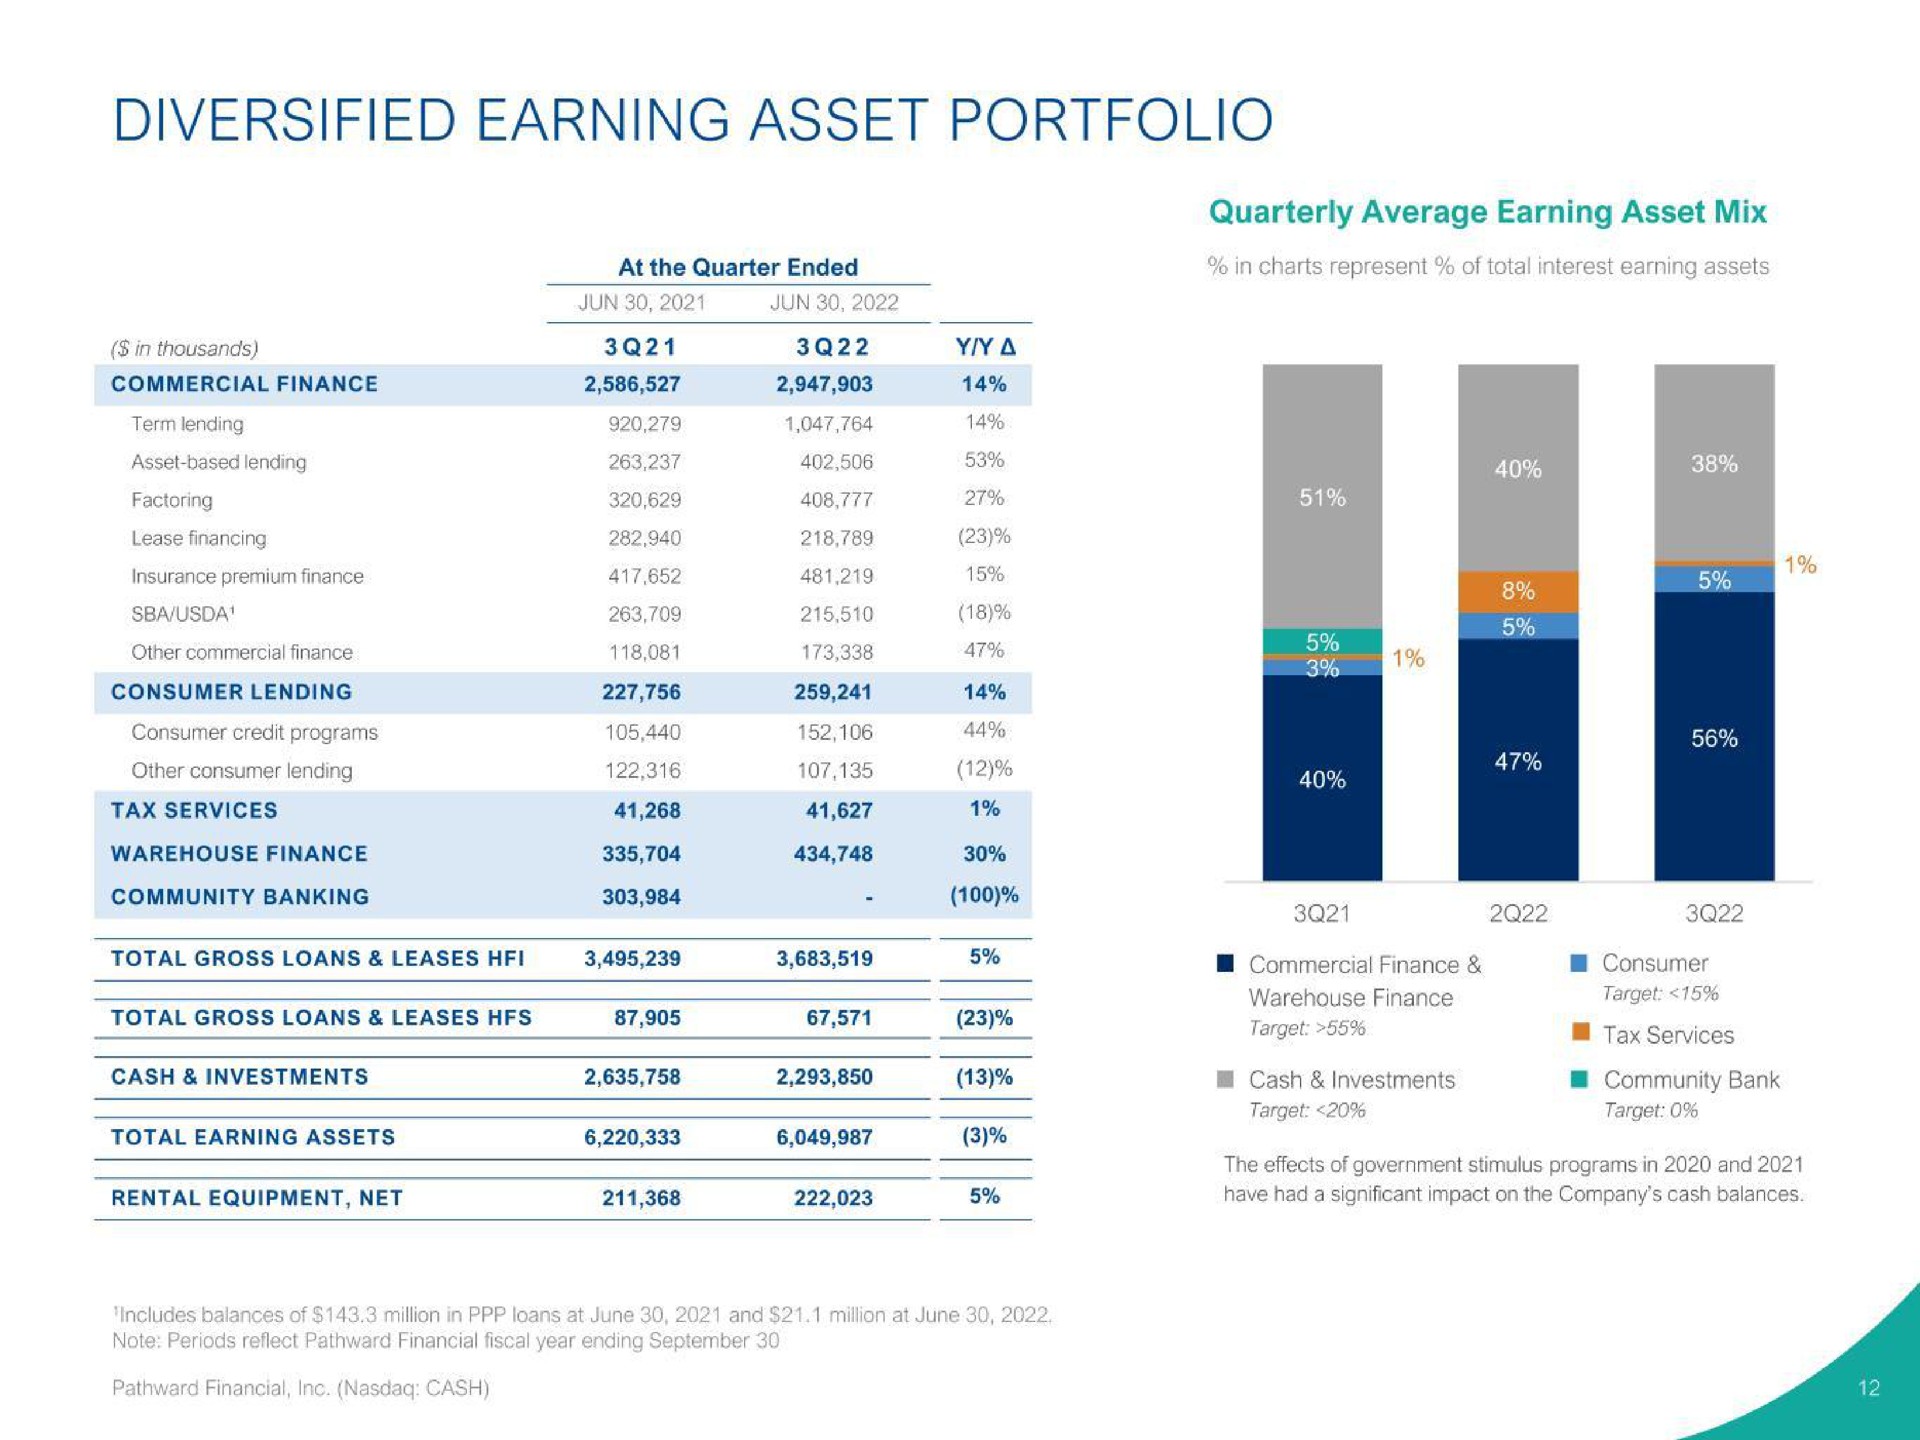 diversified earning asset portfolio target i tax services | Pathward Financial